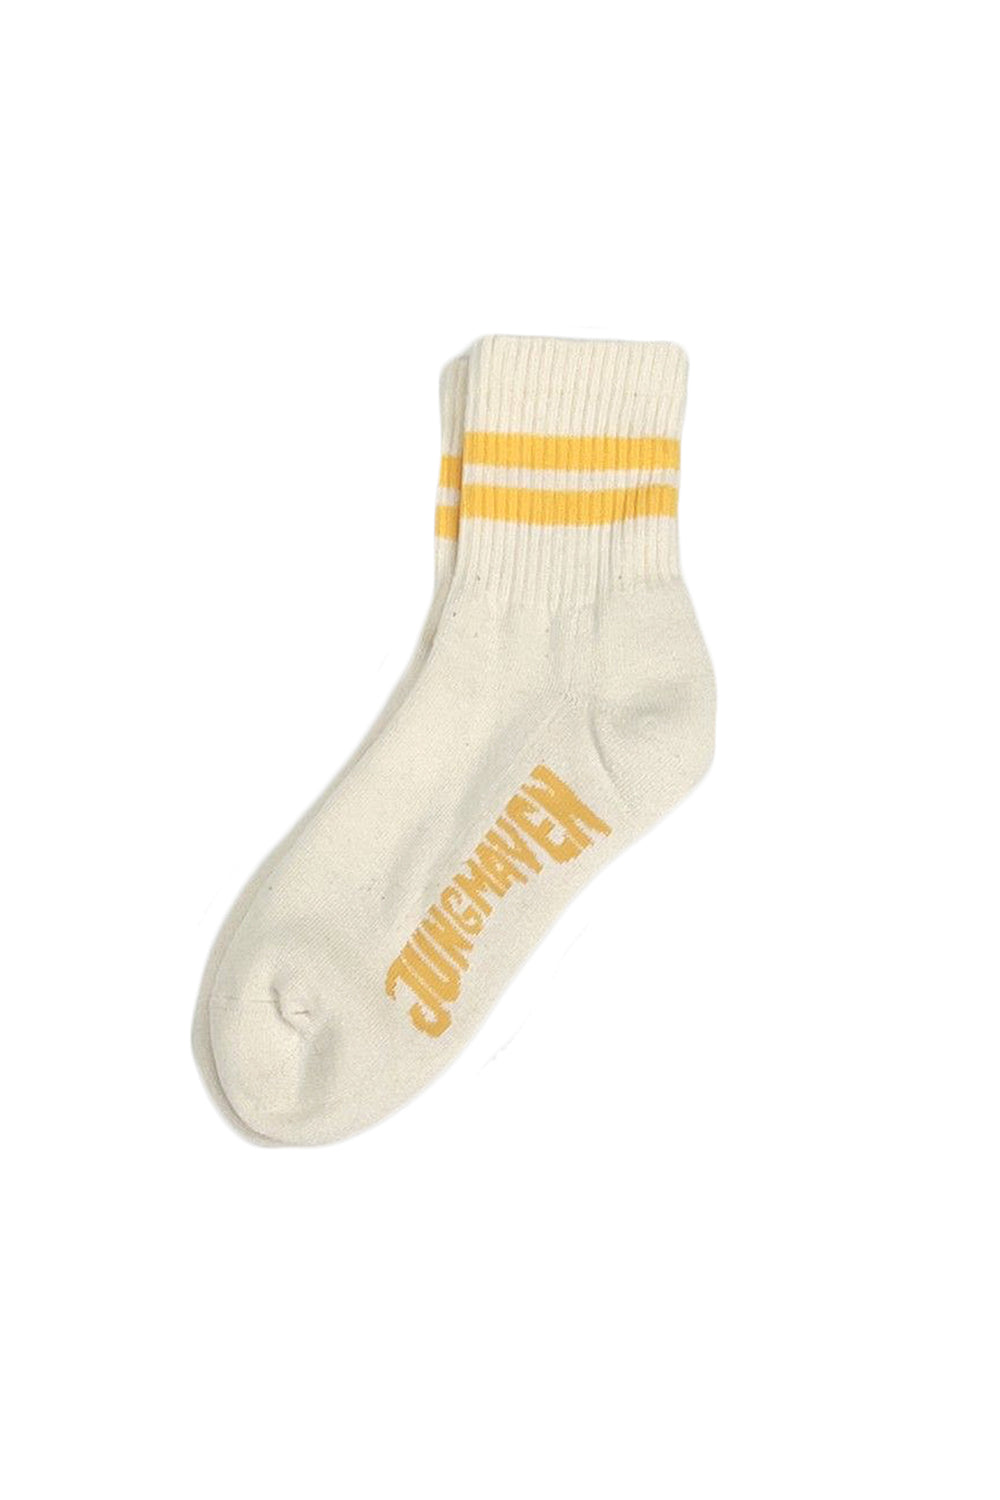 Ankle High Socks - Sunshine Pastel Yellow - American Socks